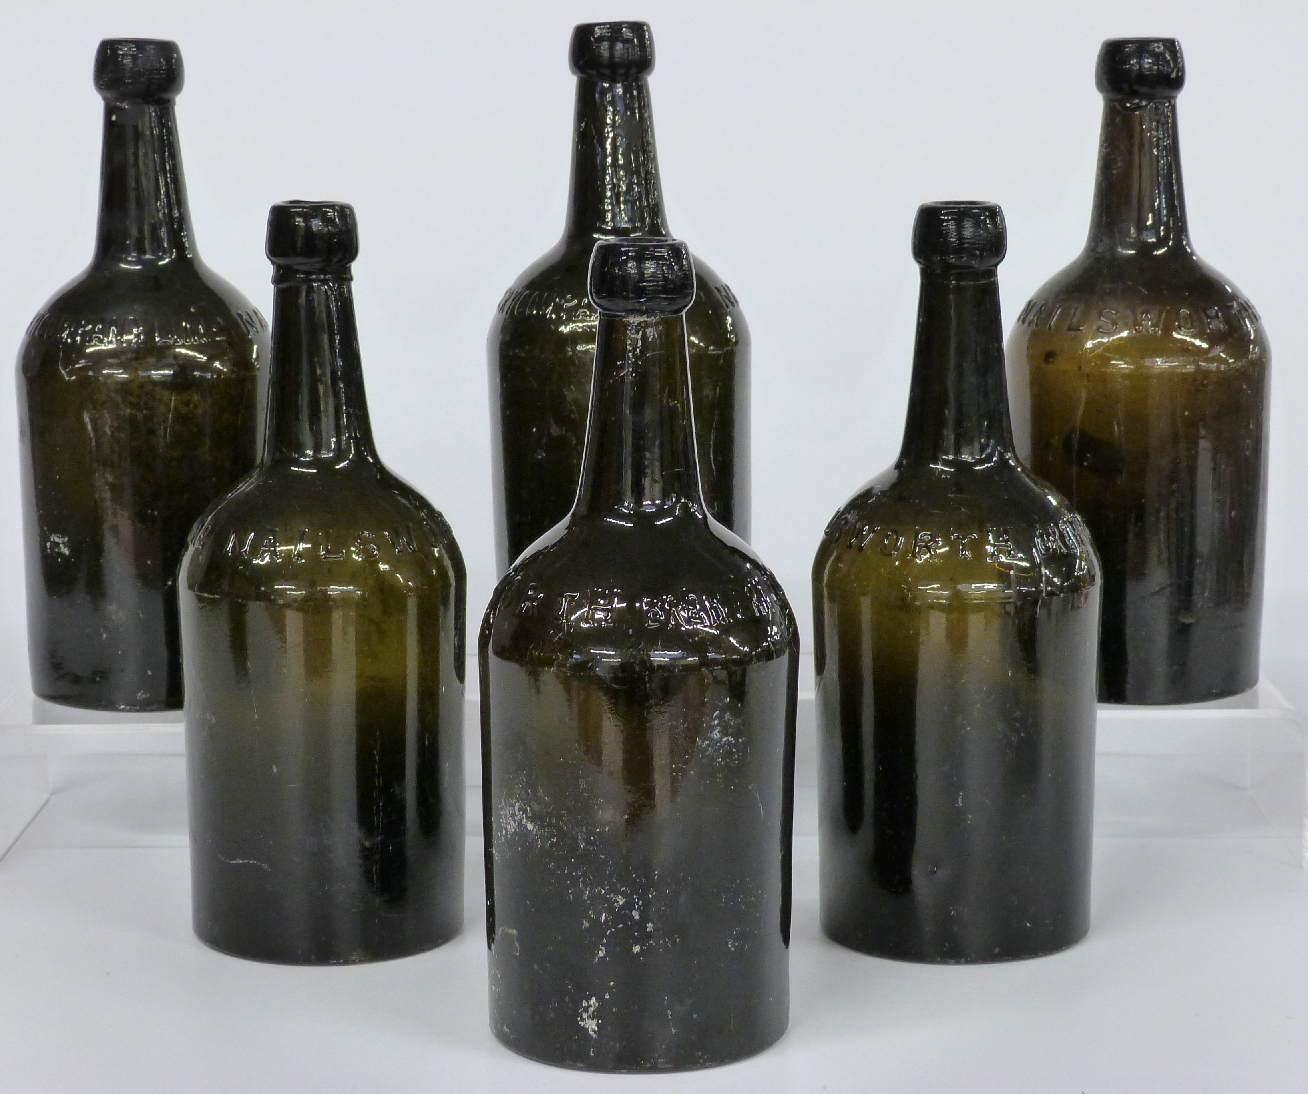 Six Nailsworth Brewery Company Ltd glass bottles